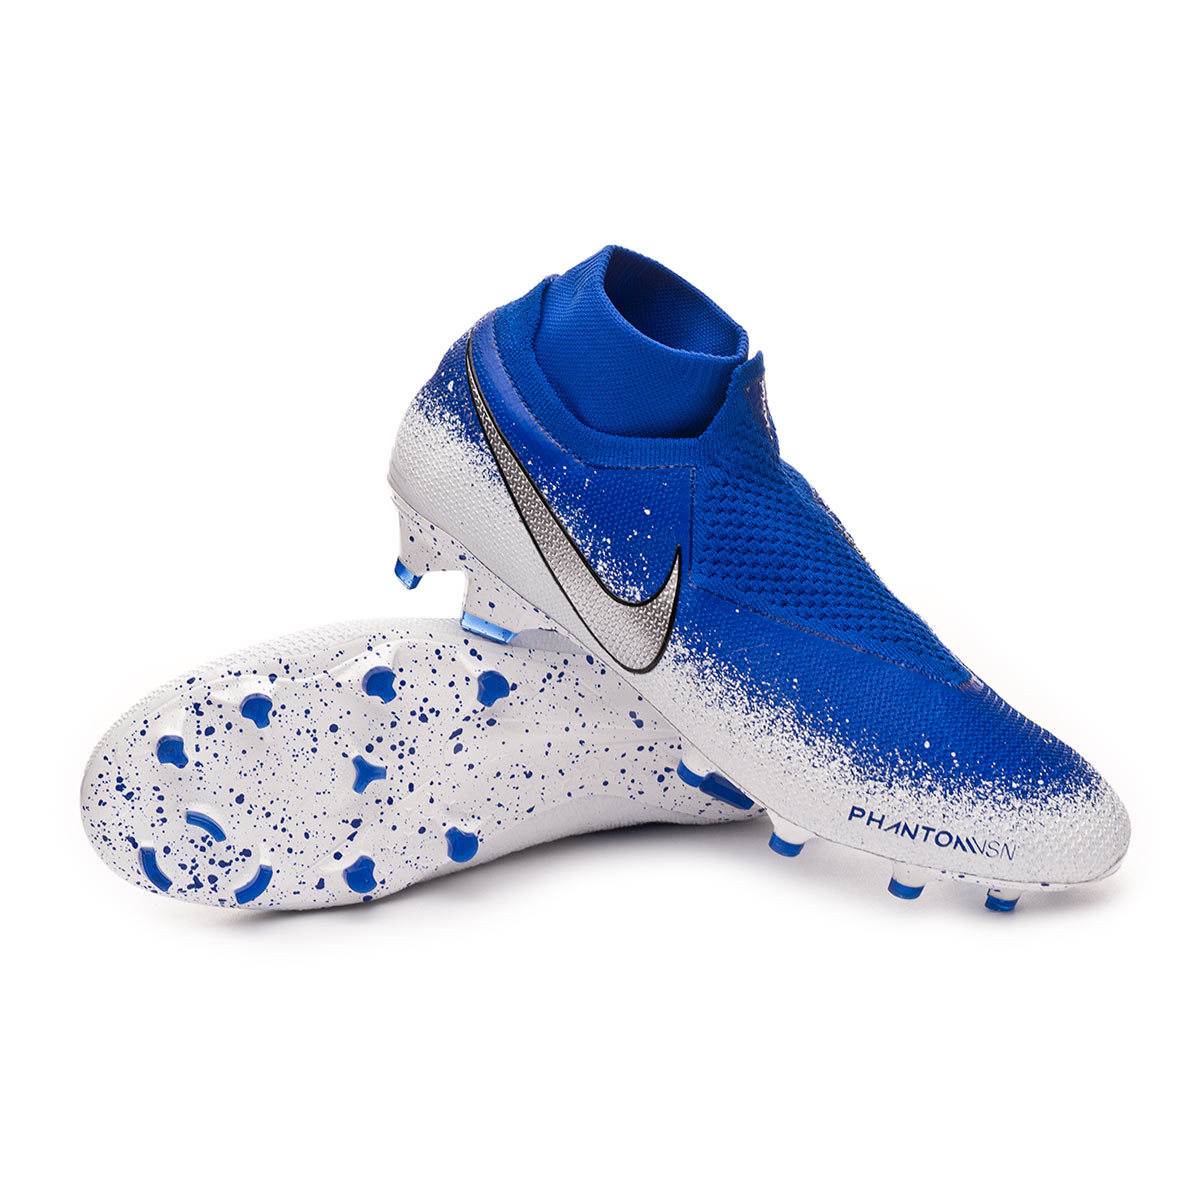 Nike Hypervenom Phantom III AG Pro Football Boots, 锟?10.00